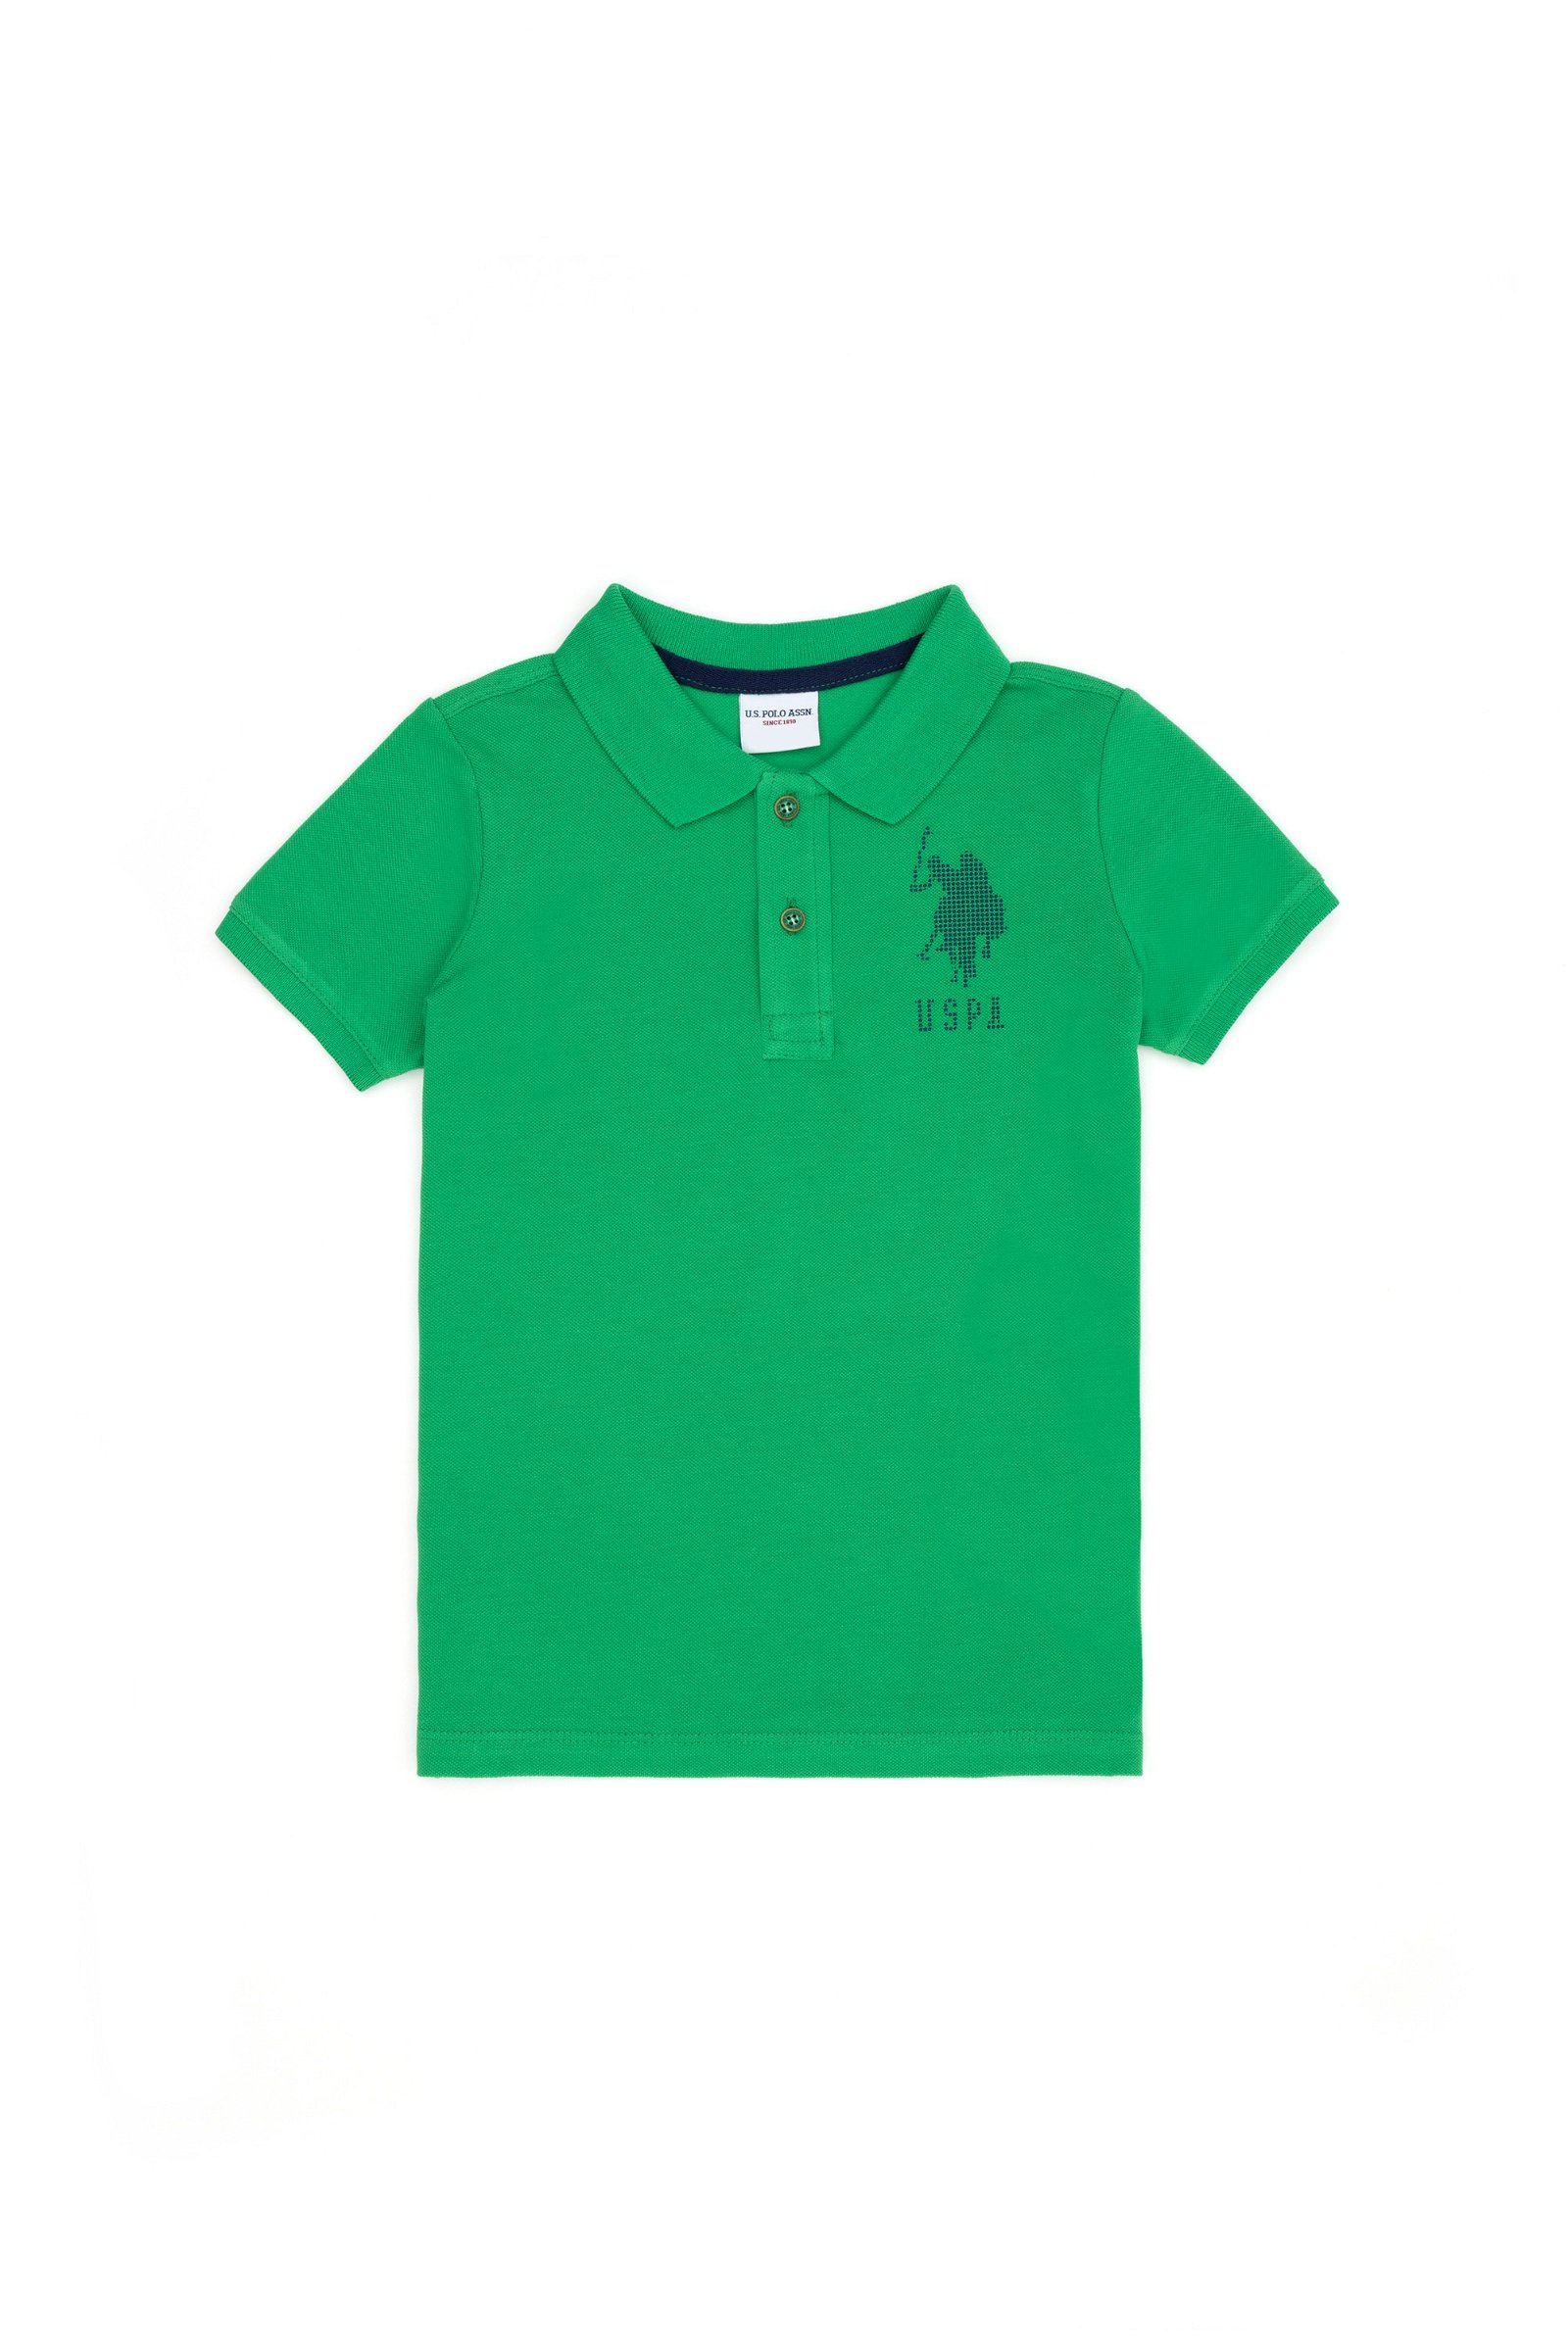 تی شرت یقه پولو سبز  استاندارد فیت  پسرانه یو اس پولو | US POLO ASSN